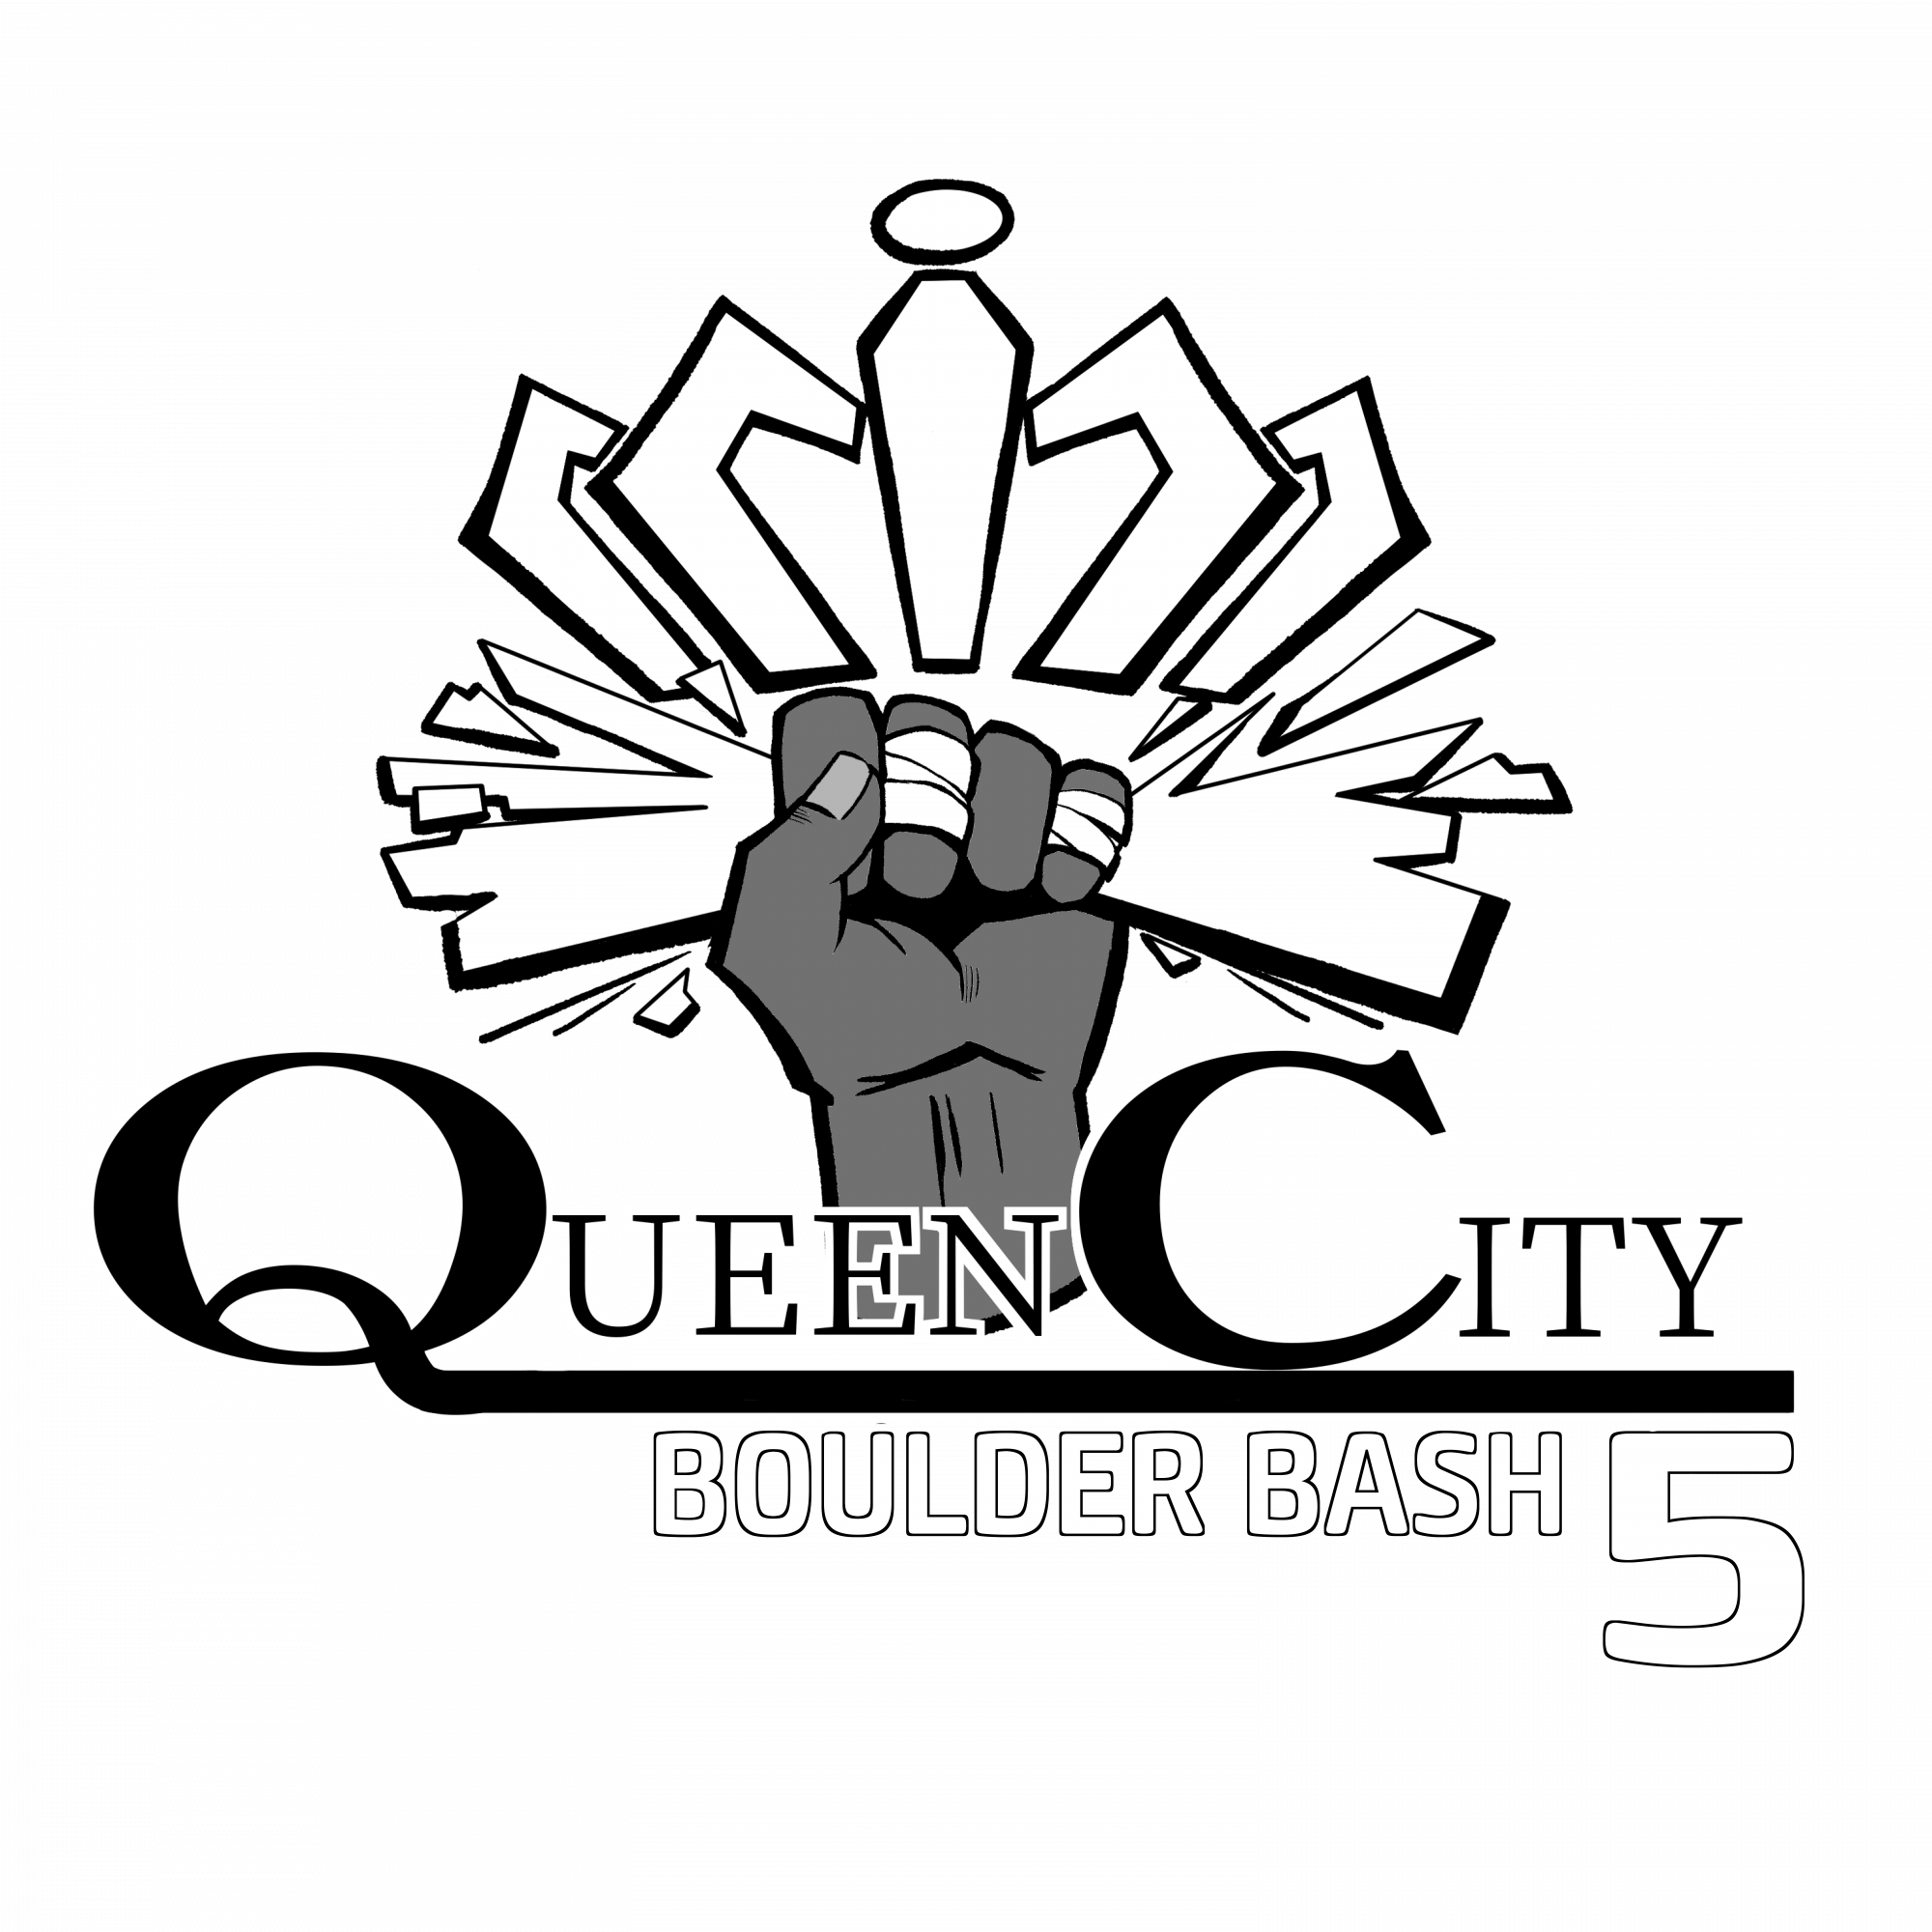 5th Annual Queen City Boulder Bash Inner Peaks